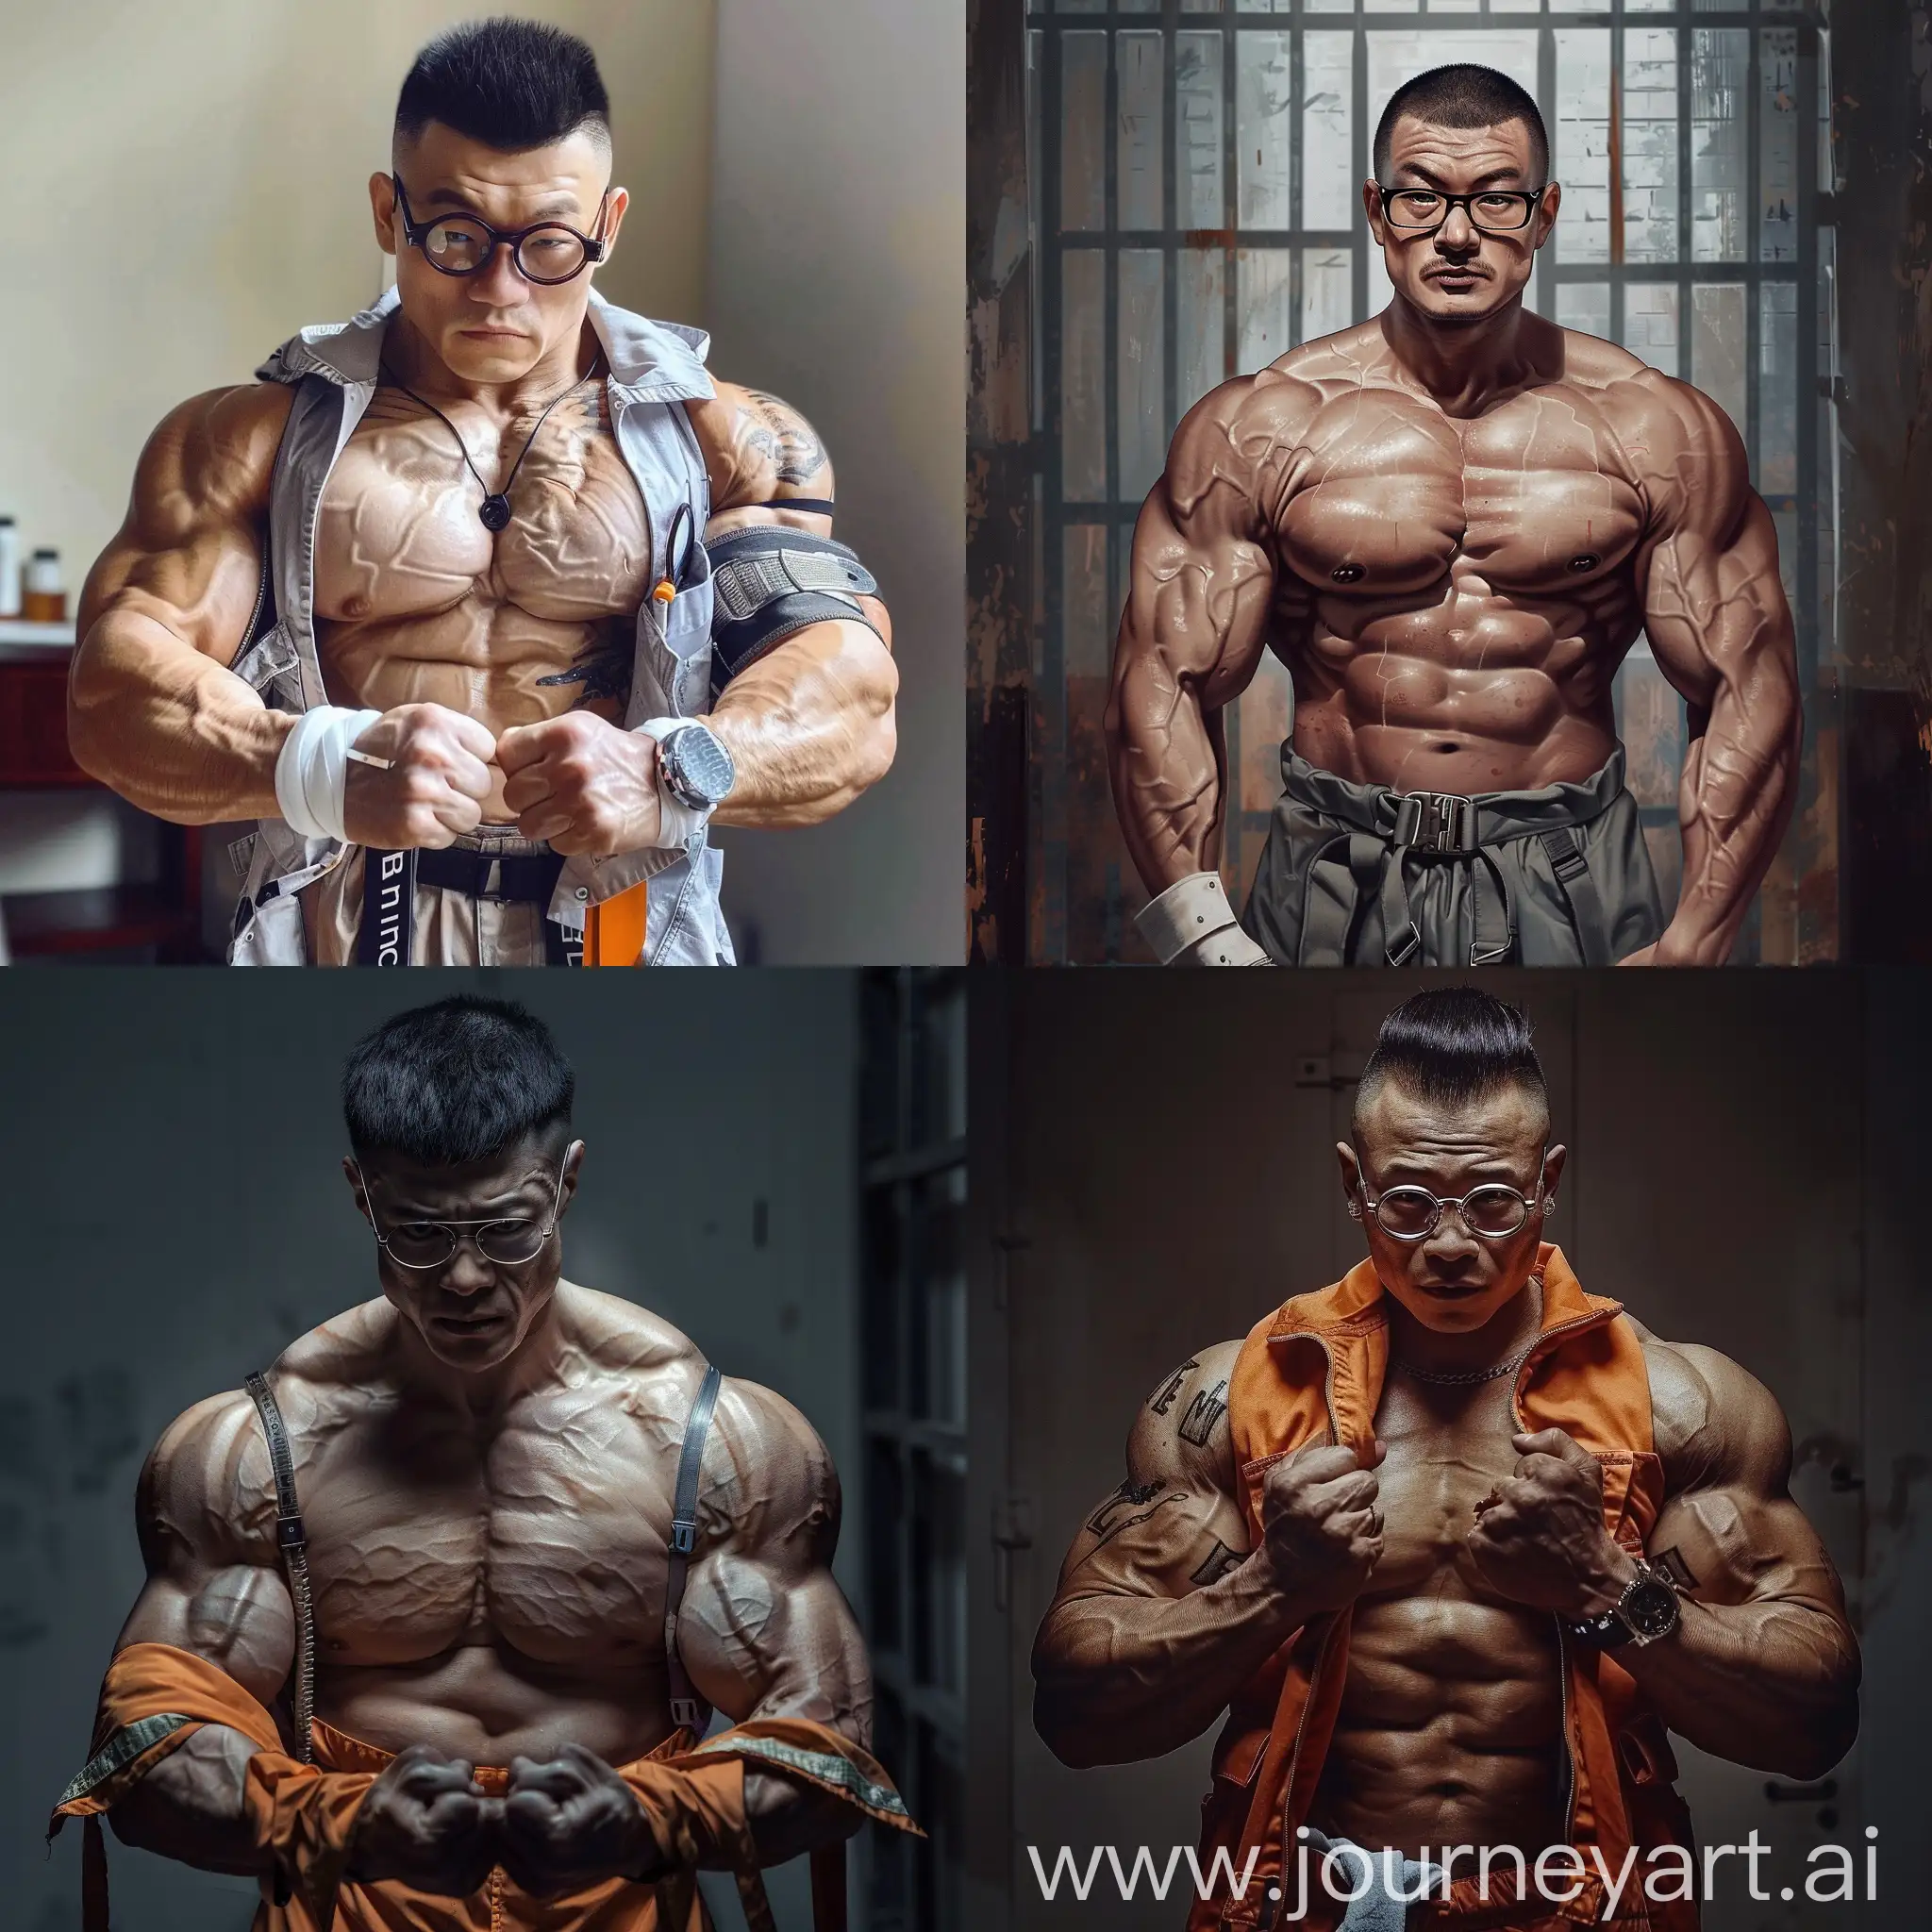 Changpeng zhao CZ (binance) as a muscular bodybuilder wearing prison clothes wearing reading glasses